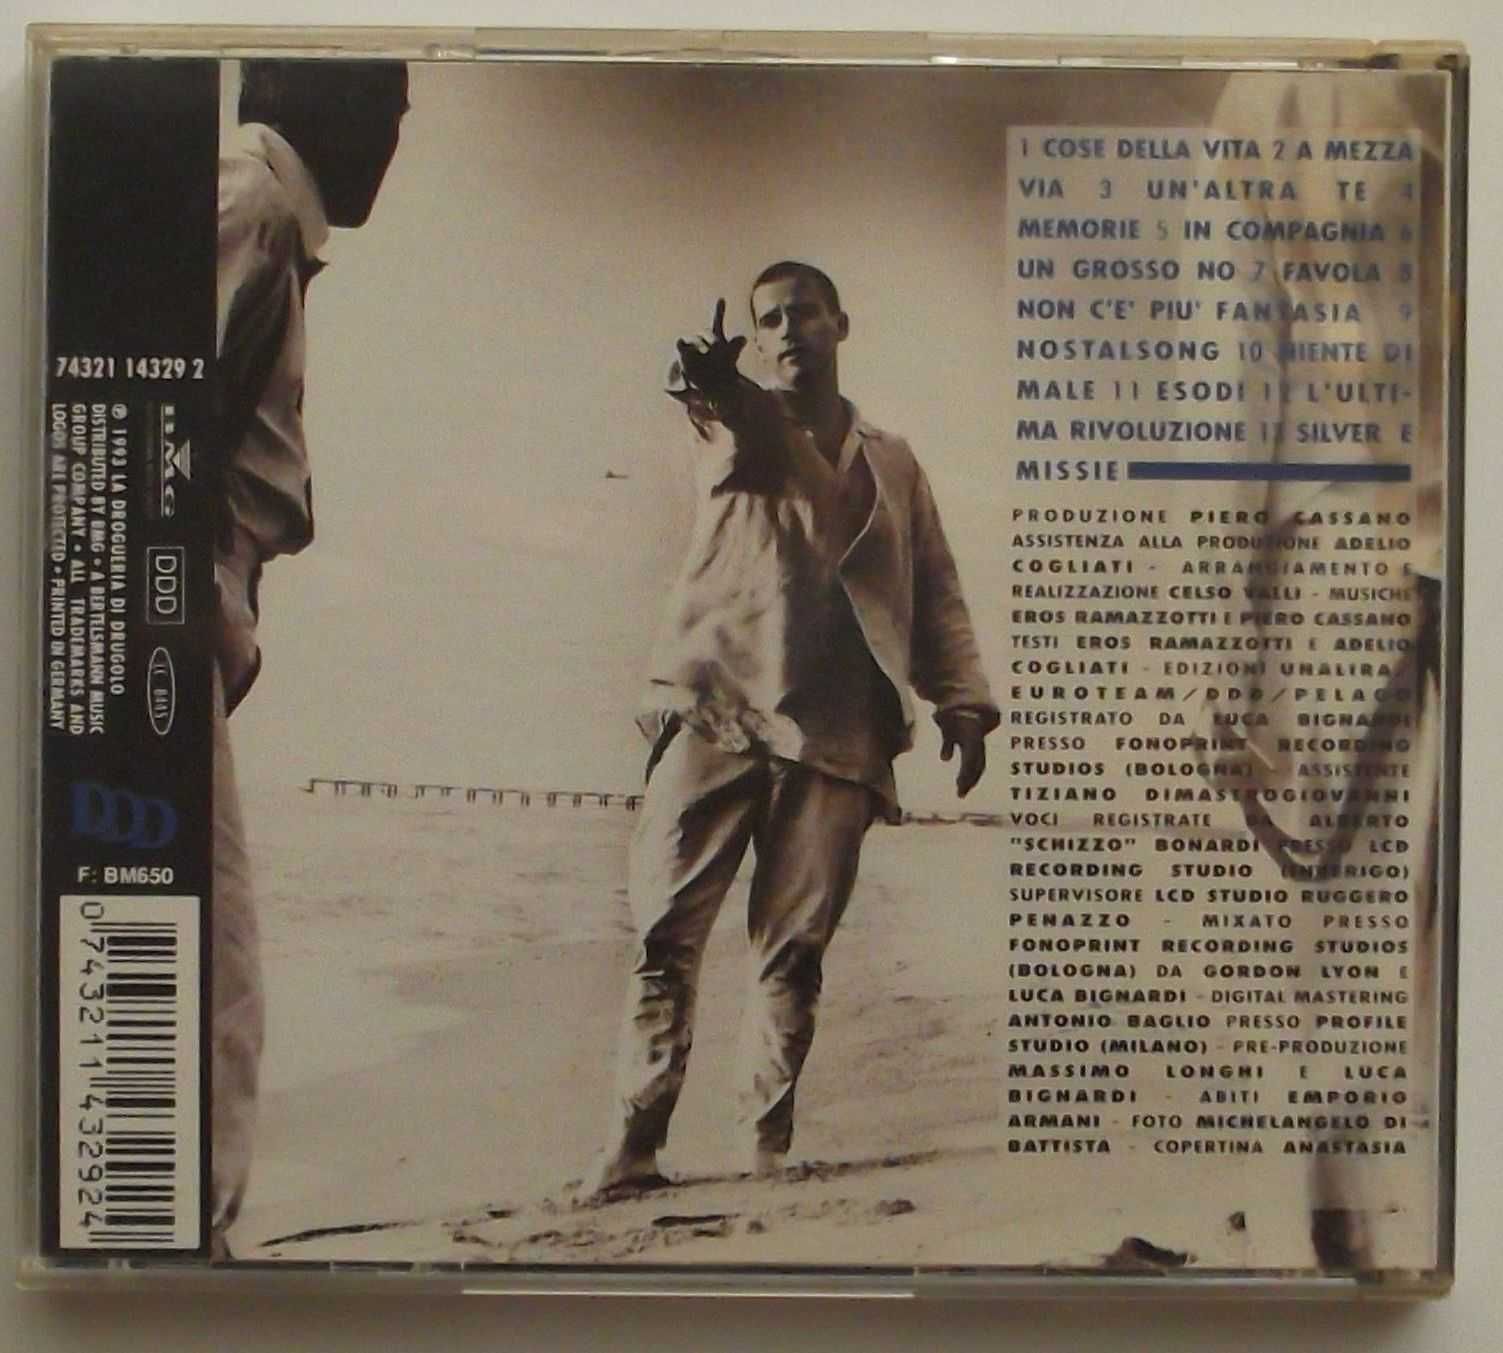 CD - Eros Ramazotti: Tutte Storie